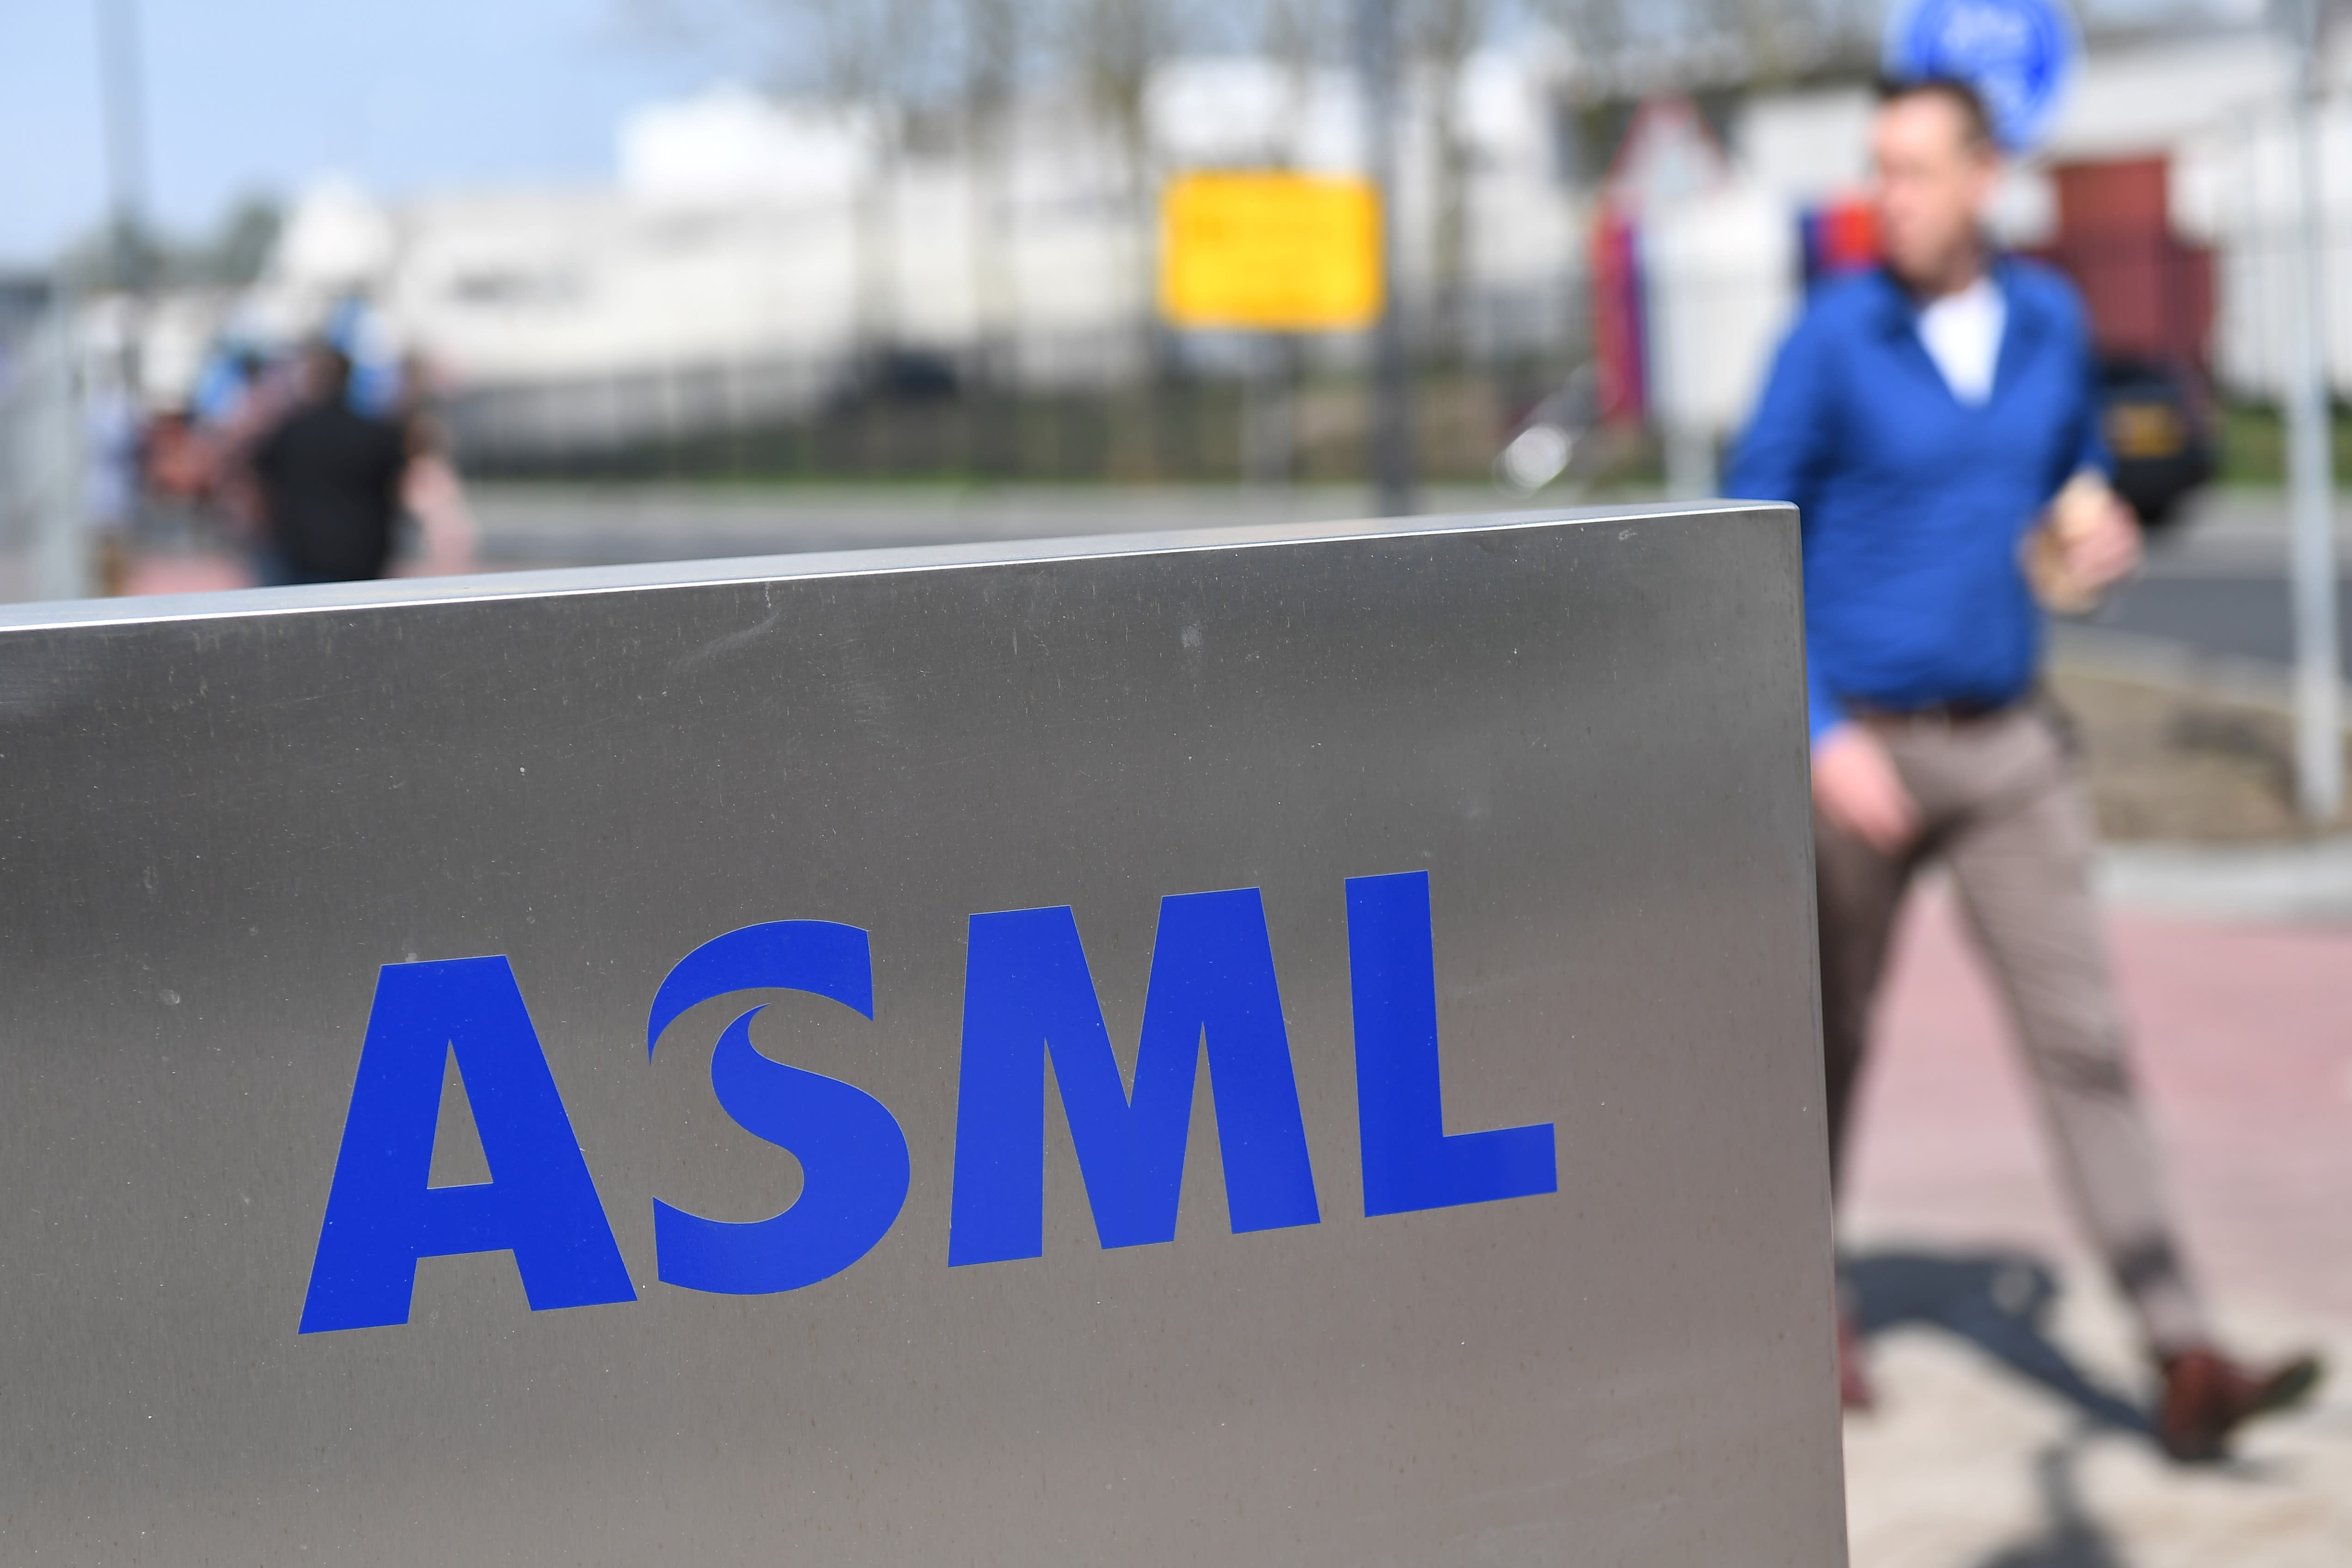 ASMLは一部の重要なチップ製造ツールの中国への輸出を禁止された